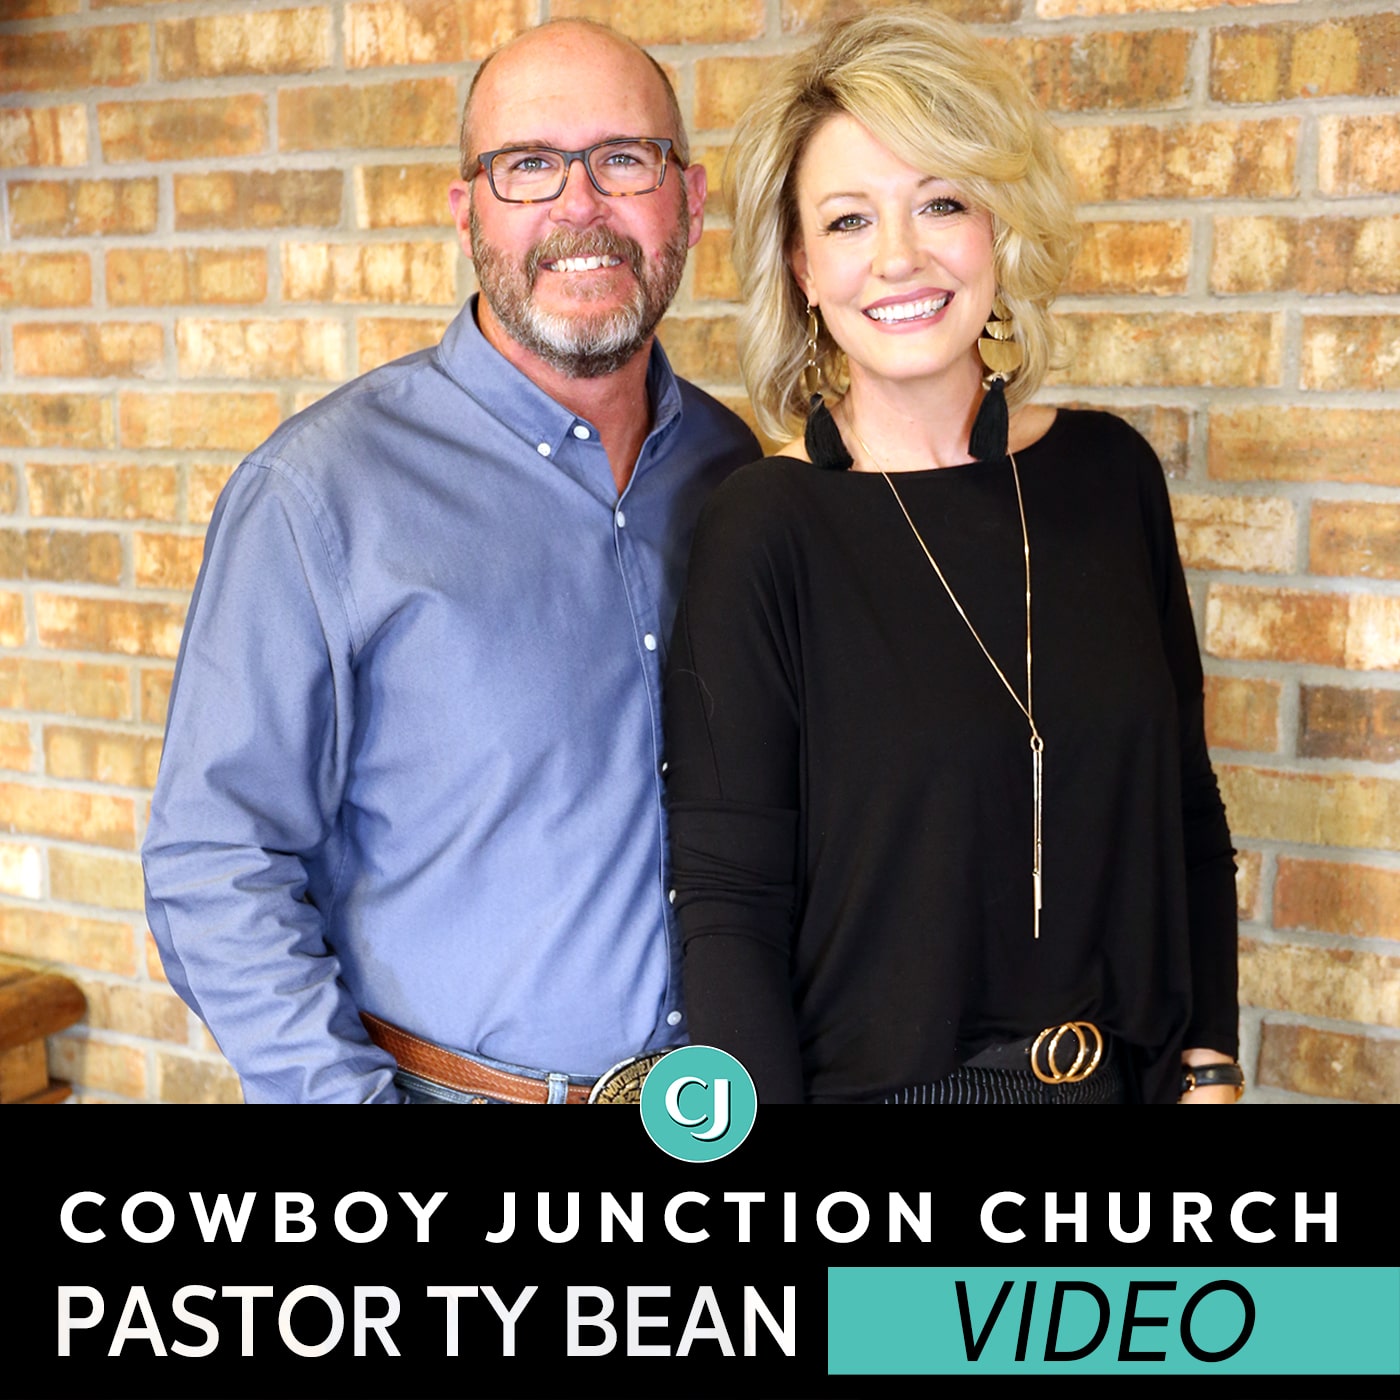 Cowboy Junction Church Video